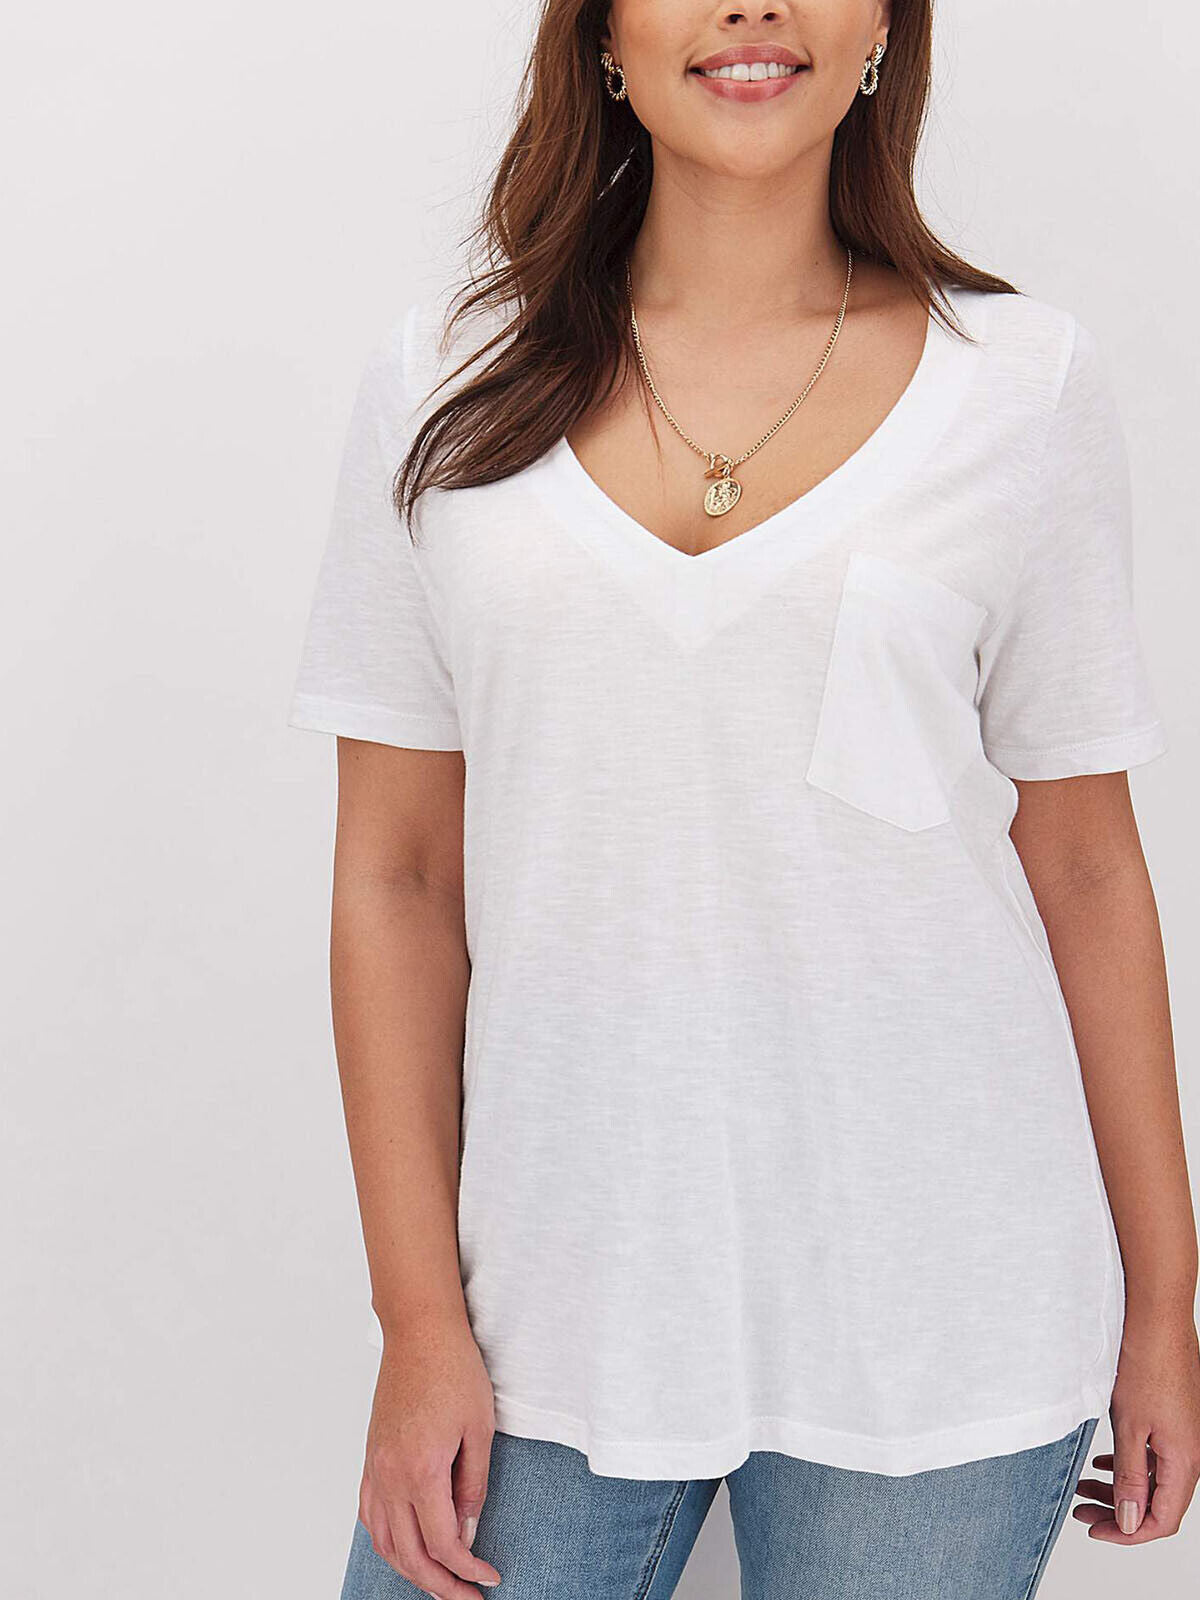 Simply Be White Short Sleeve Slub Jersey Pocket T-Shirt Sizes 16, 18, 24, 26, 30